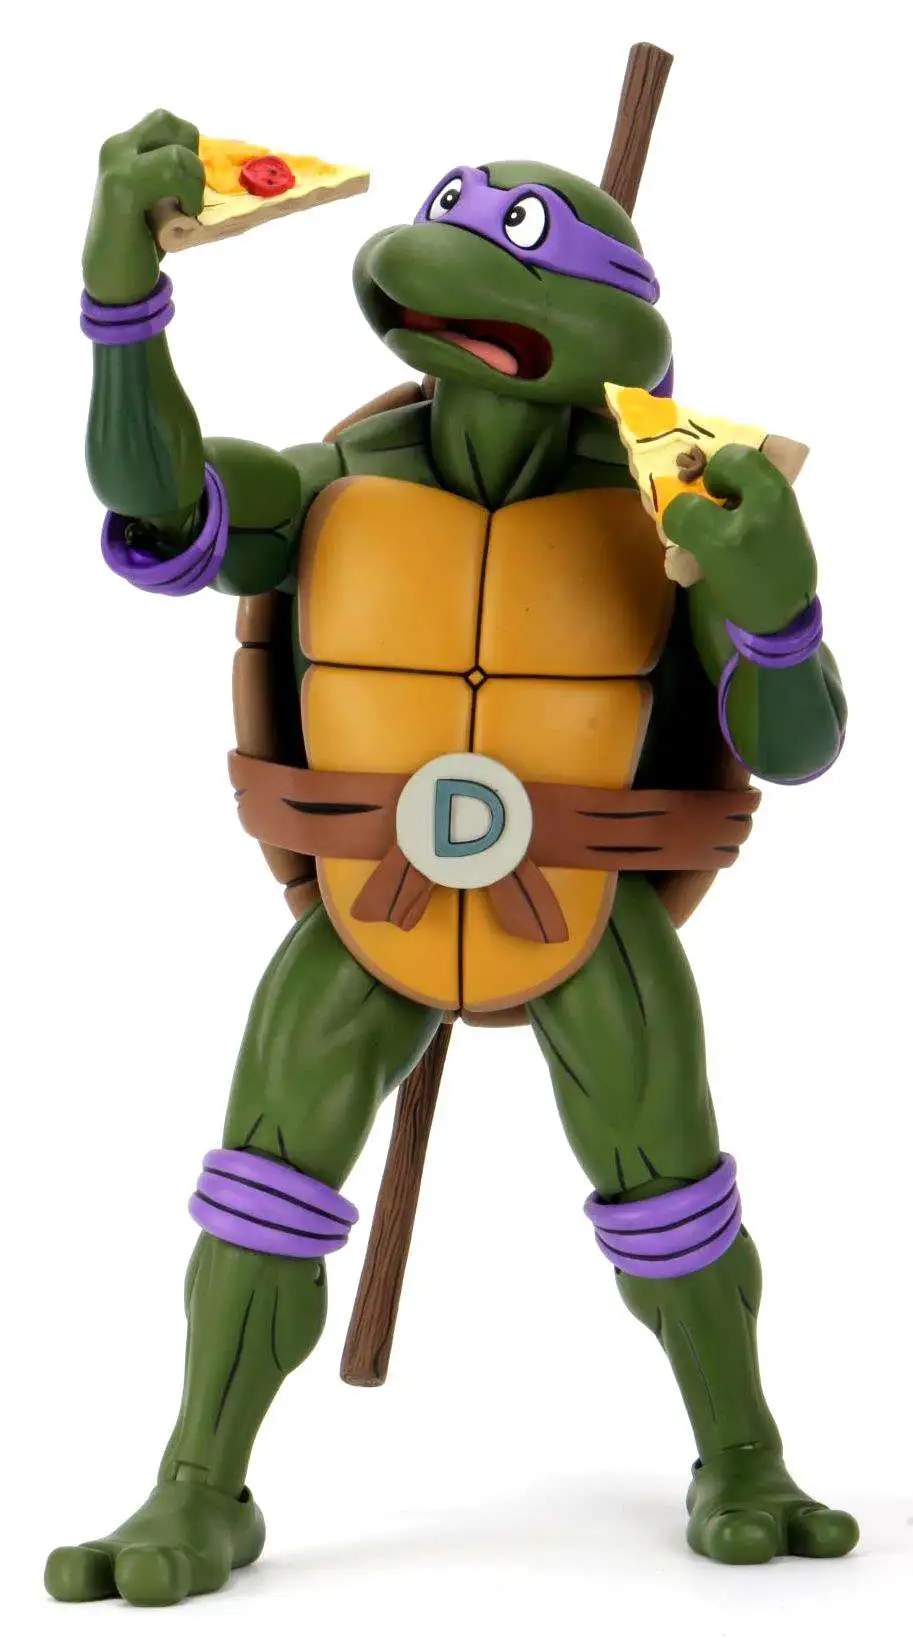 Action Figure Donatello: Tartarugas Ninja (Teenage Mutant Ninja